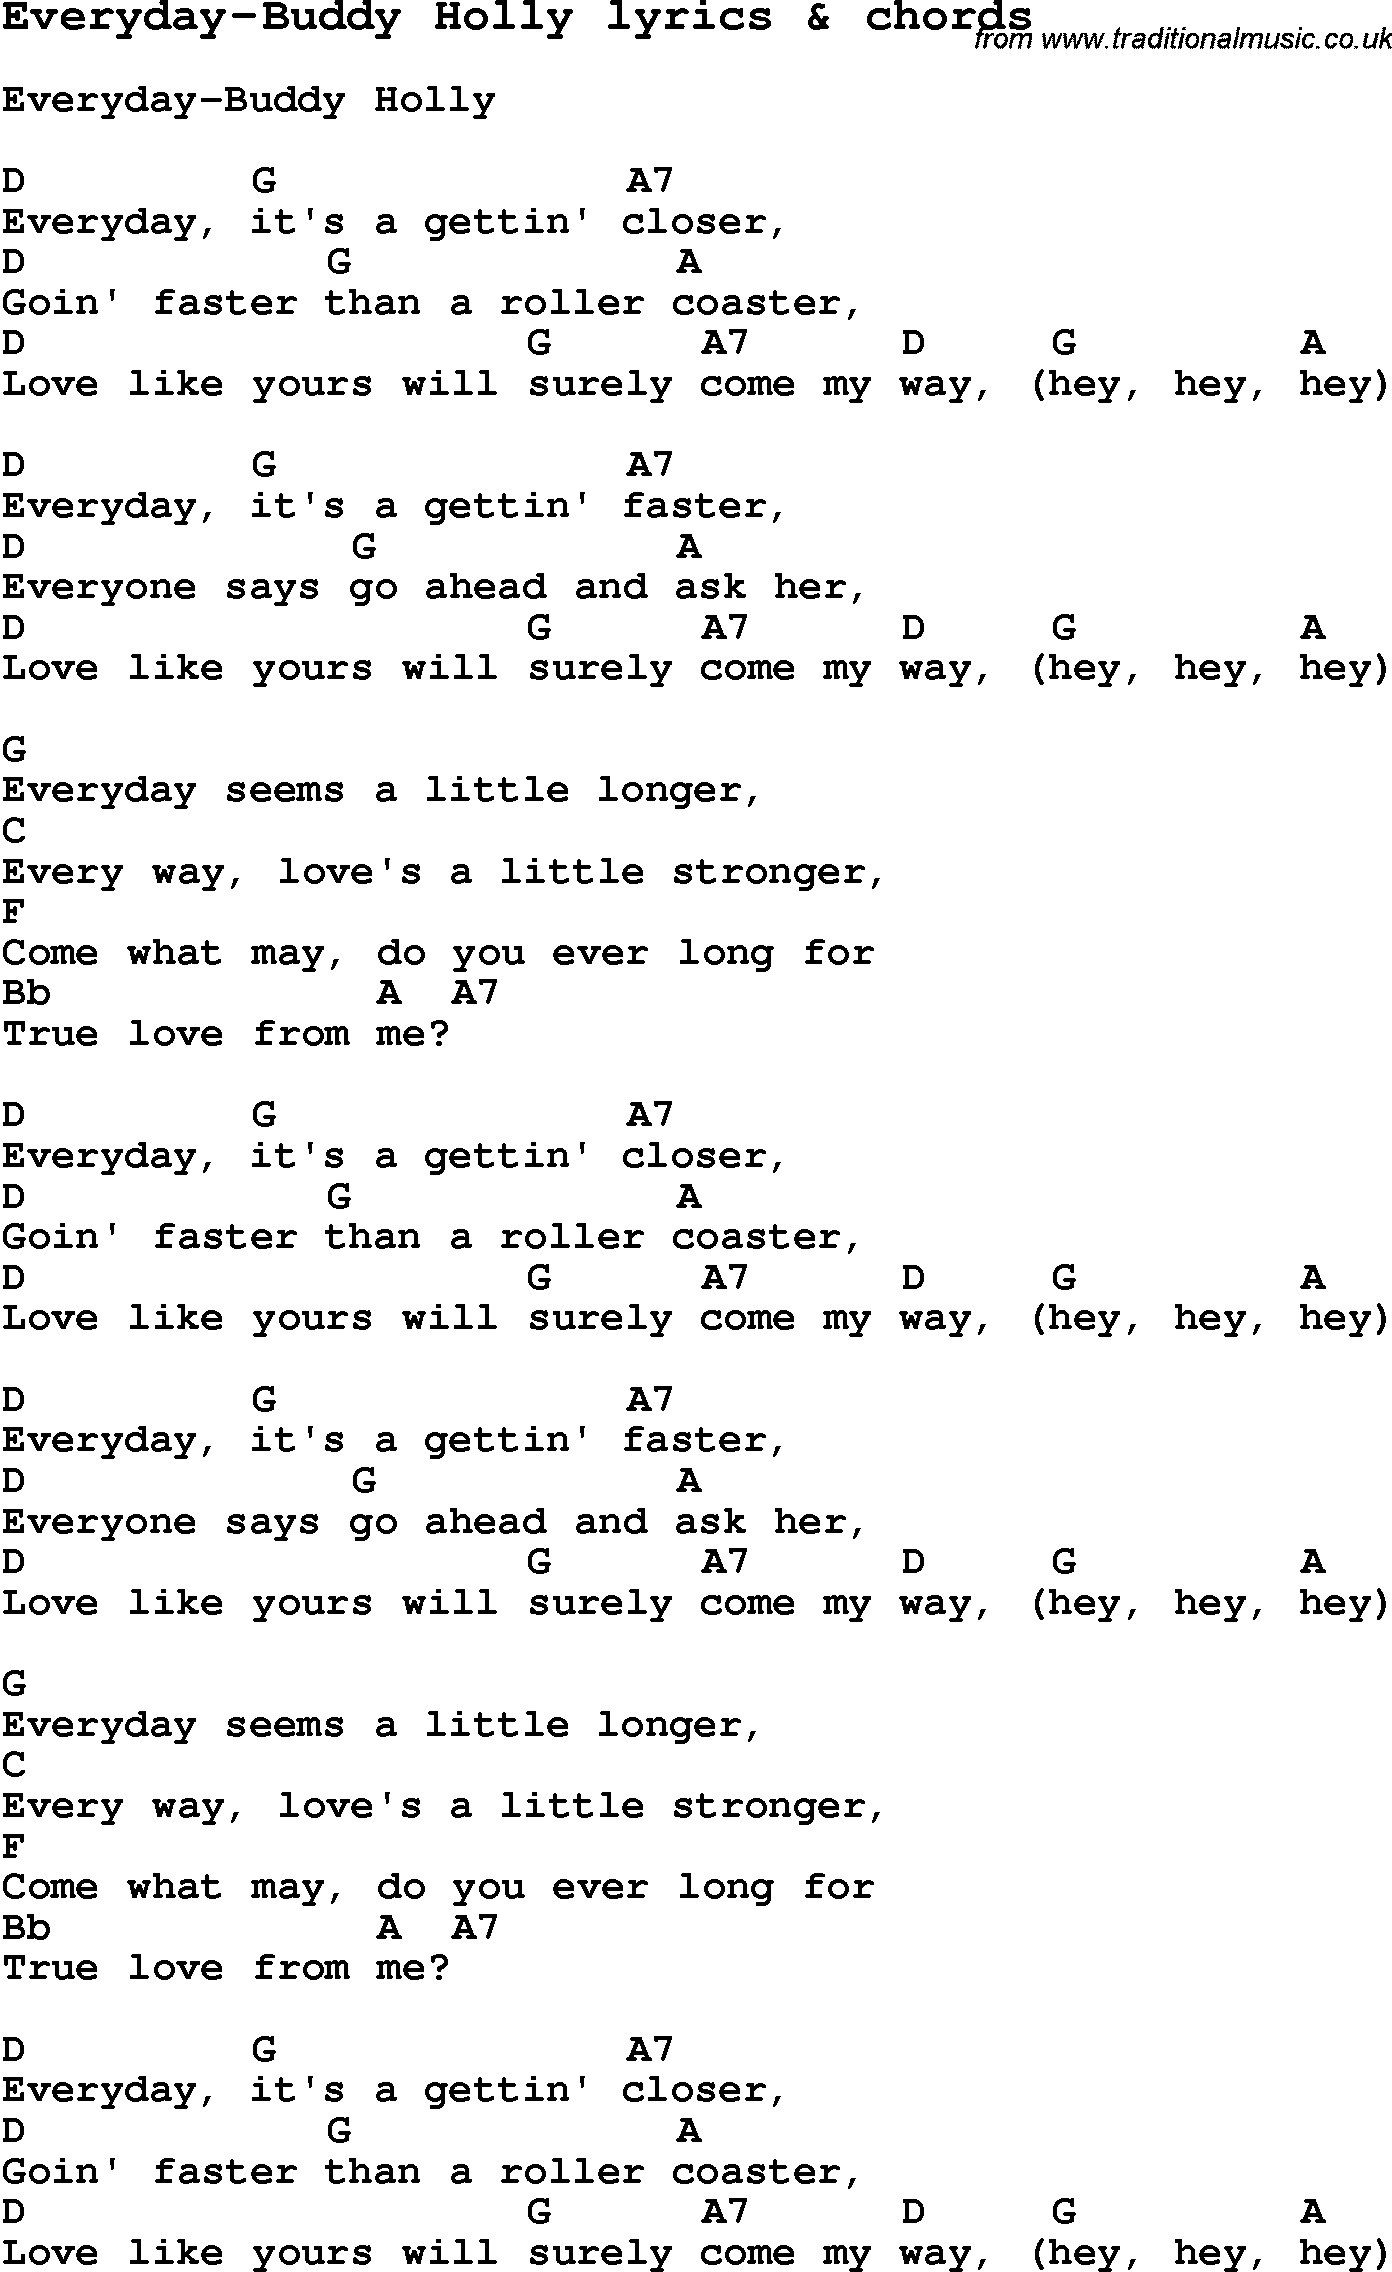 Love Song Lyrics for: Everyday-Buddy Holly with chords for Ukulele, Guitar Banjo etc.